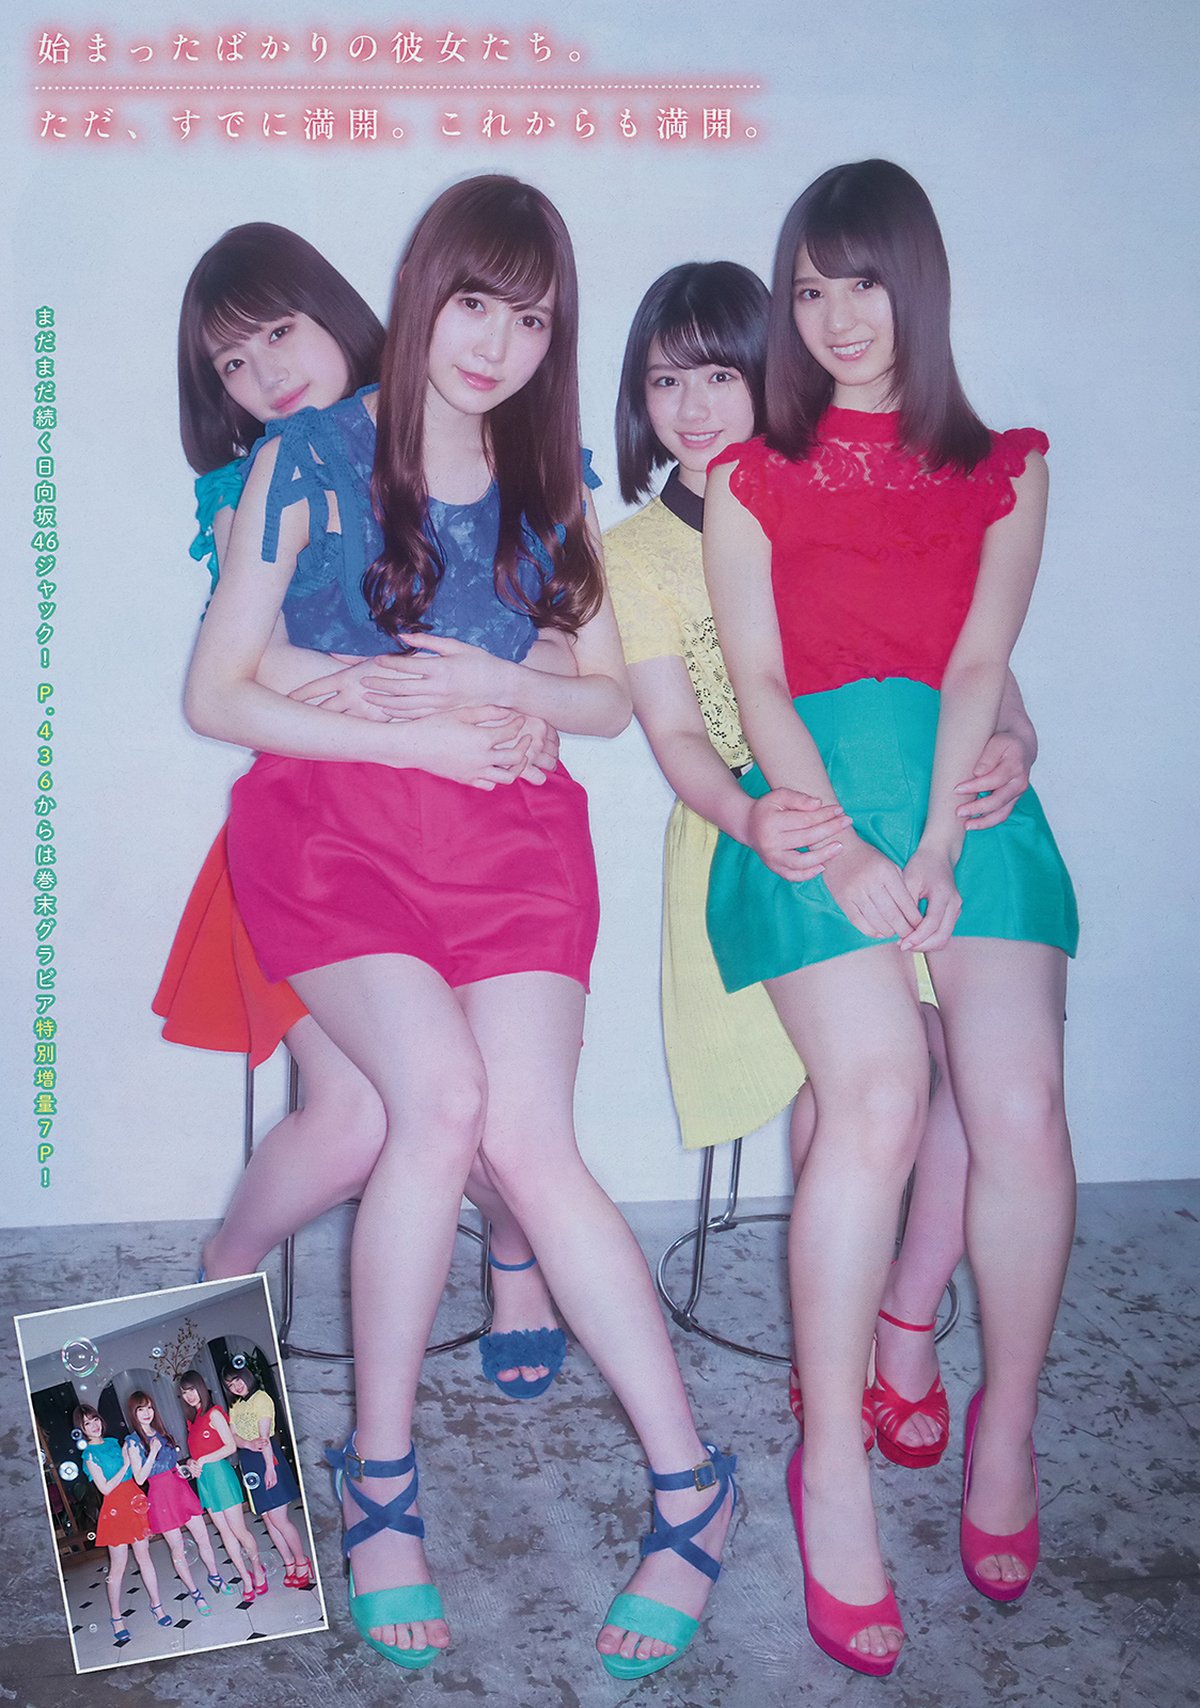 Young Magazine 2019 No 17 Hinata Zaka 46 日向坂46 0007 0061782225.jpg